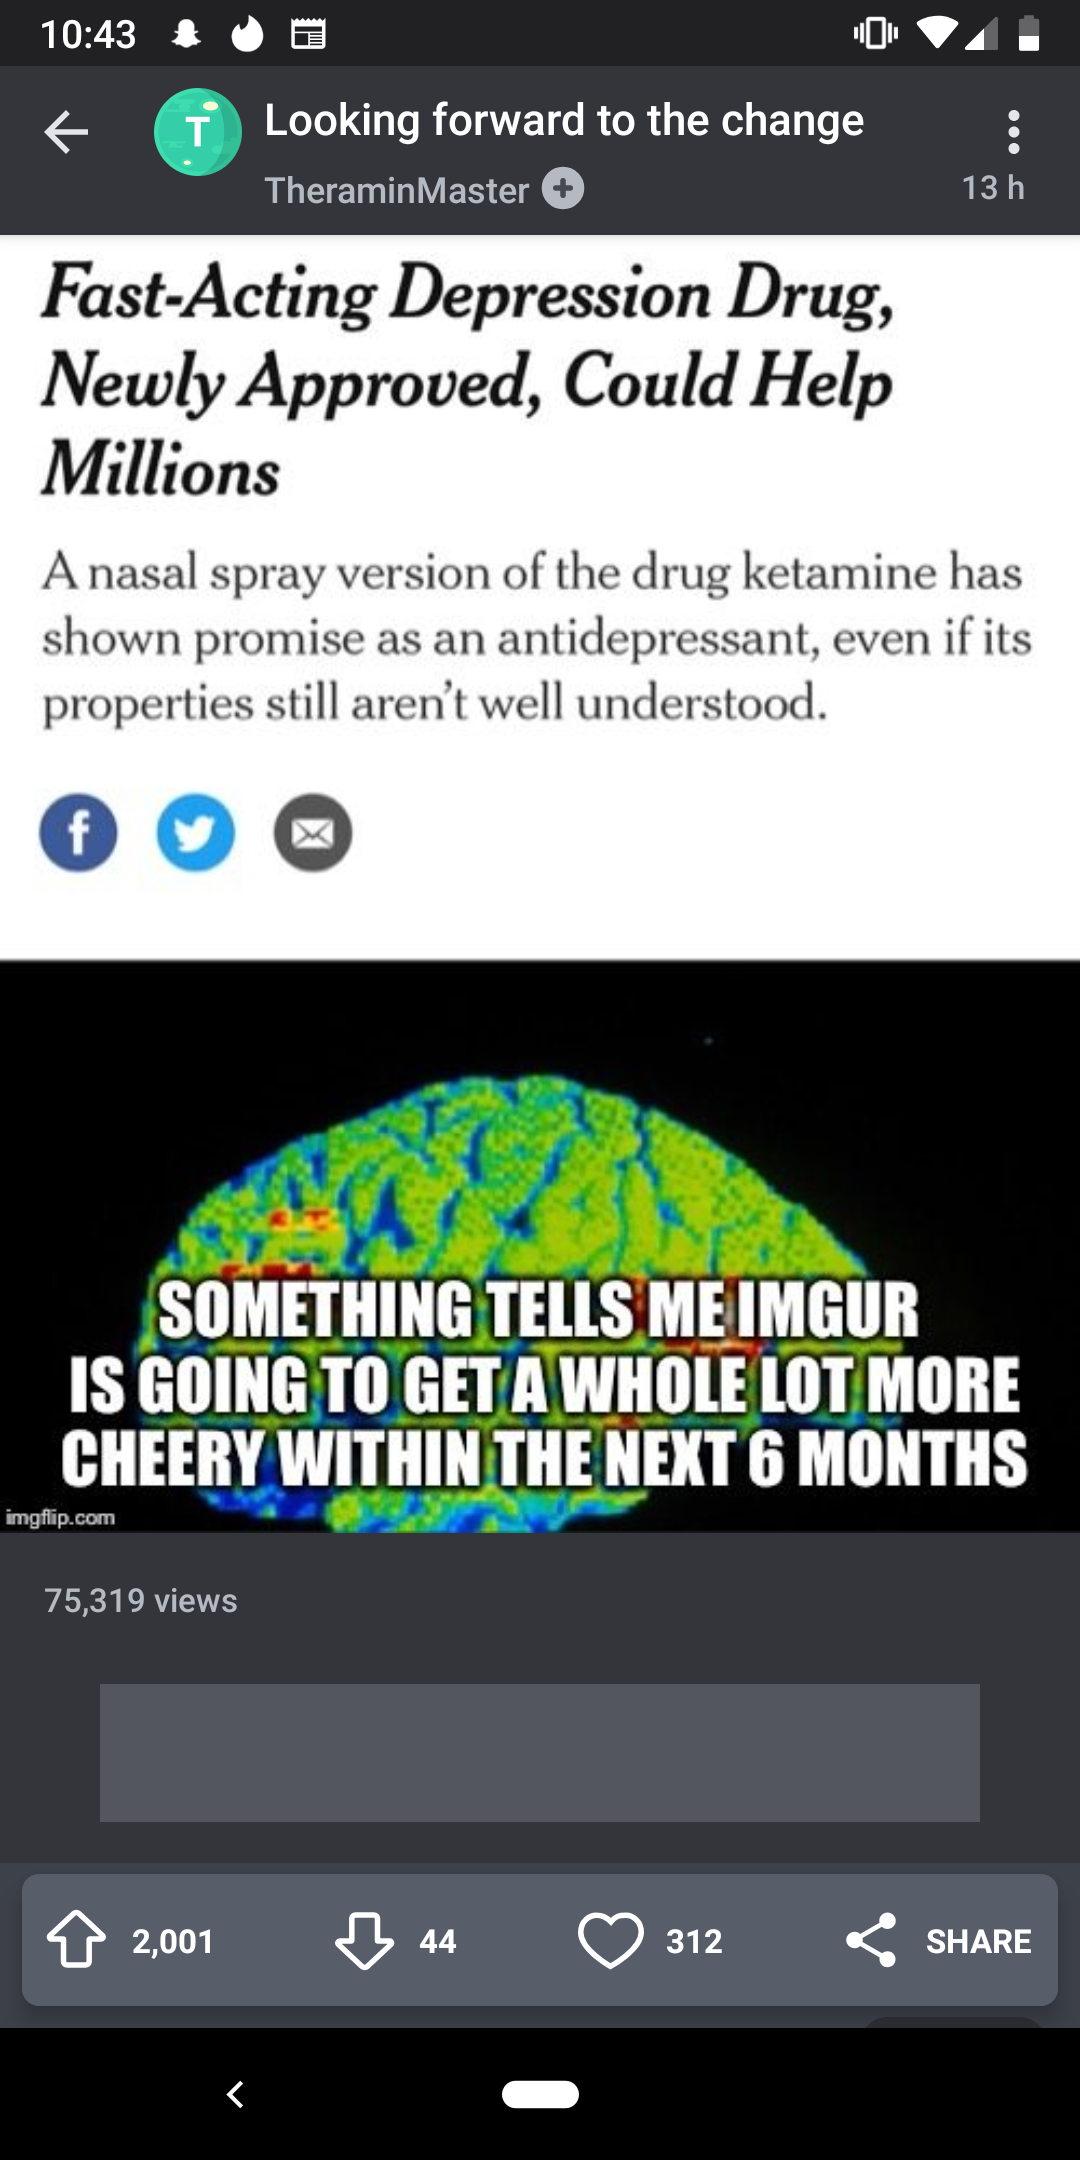 Yep, <a href="https://news.wttw.com/2019/03/11/fda-approve-ketamine-nasal-spray-new-depression-treatment" target="_blank" nofollow>Ketamine</a> will be on the market soon. What a world.